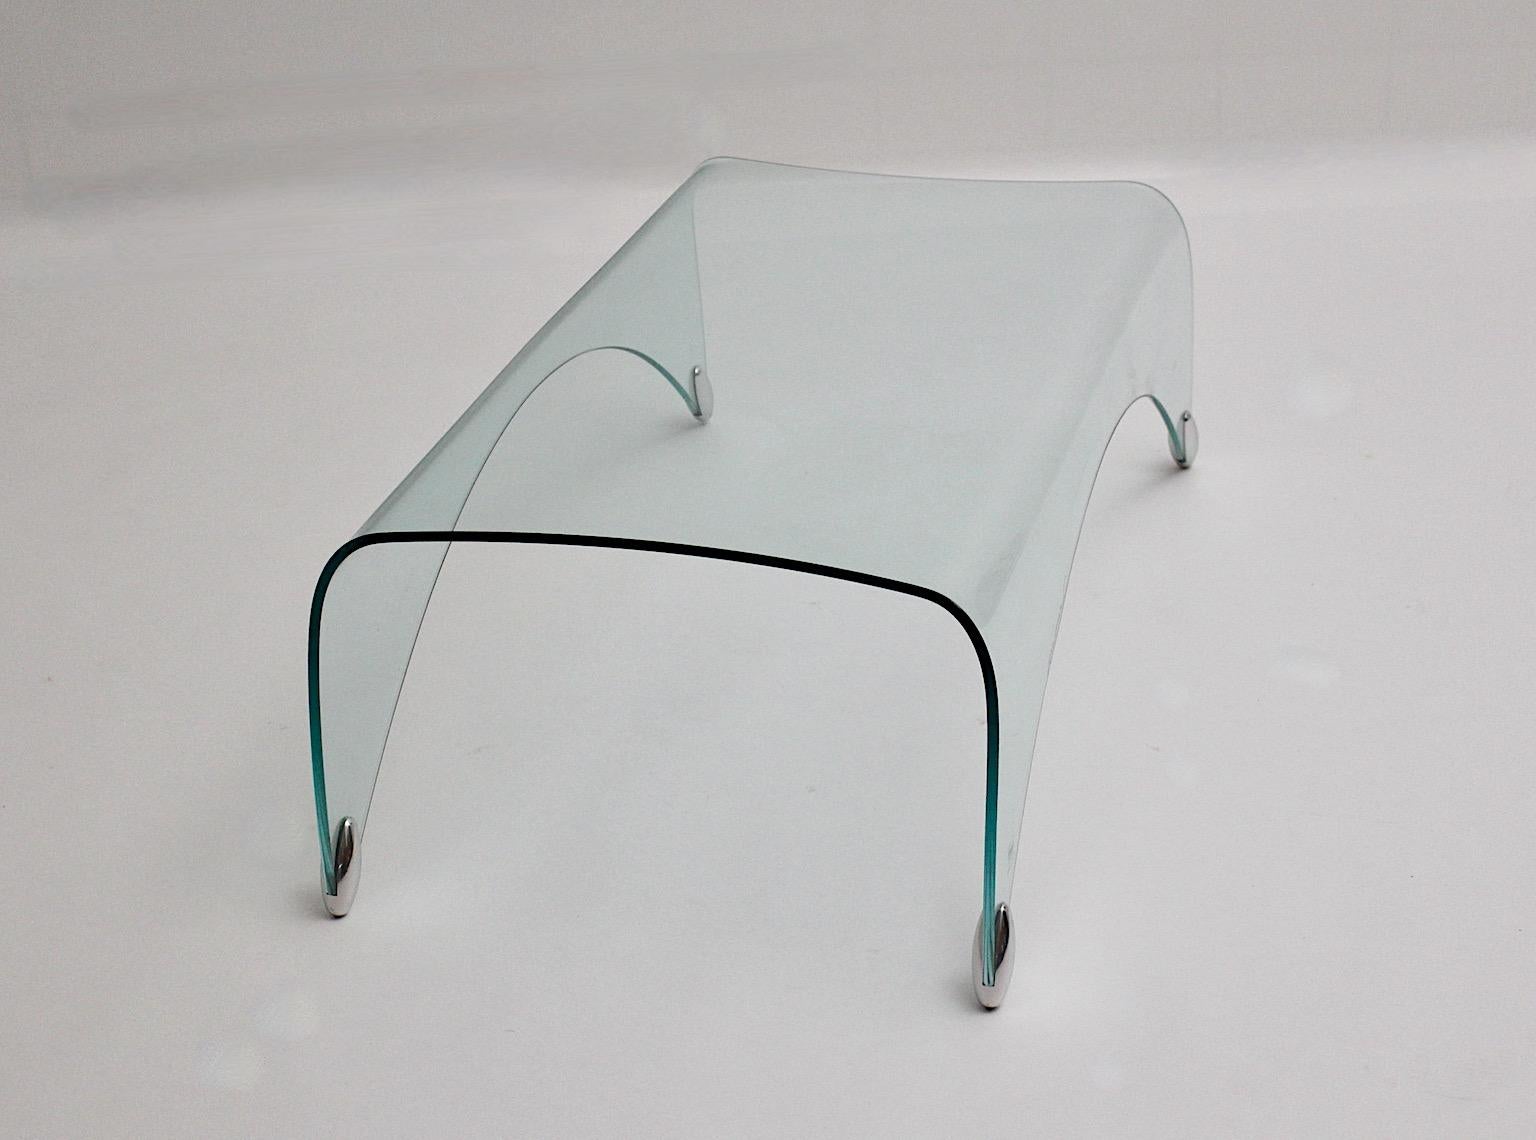 Modernist Vintage Organic Glass Sofa Table Massimo Iosa Ghini Fiam Italy 20th C For Sale 1